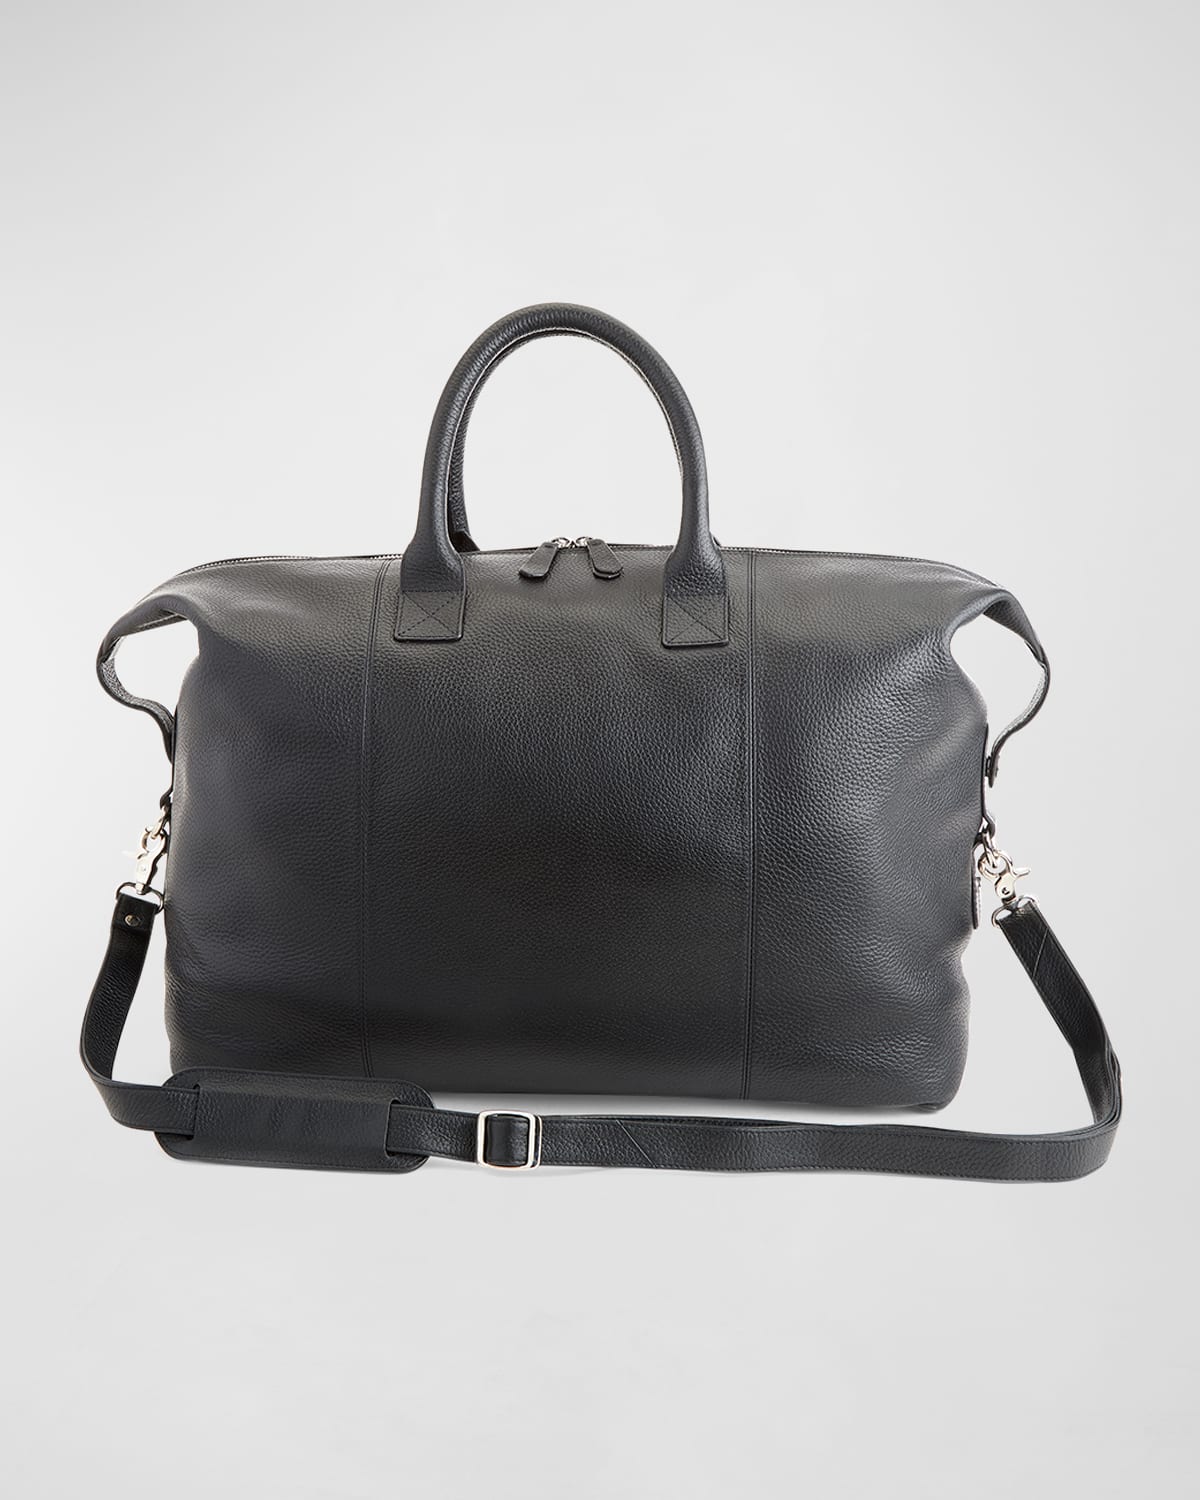 Royce New York Personalized Medium Executive Leather Duffel Bag In Black